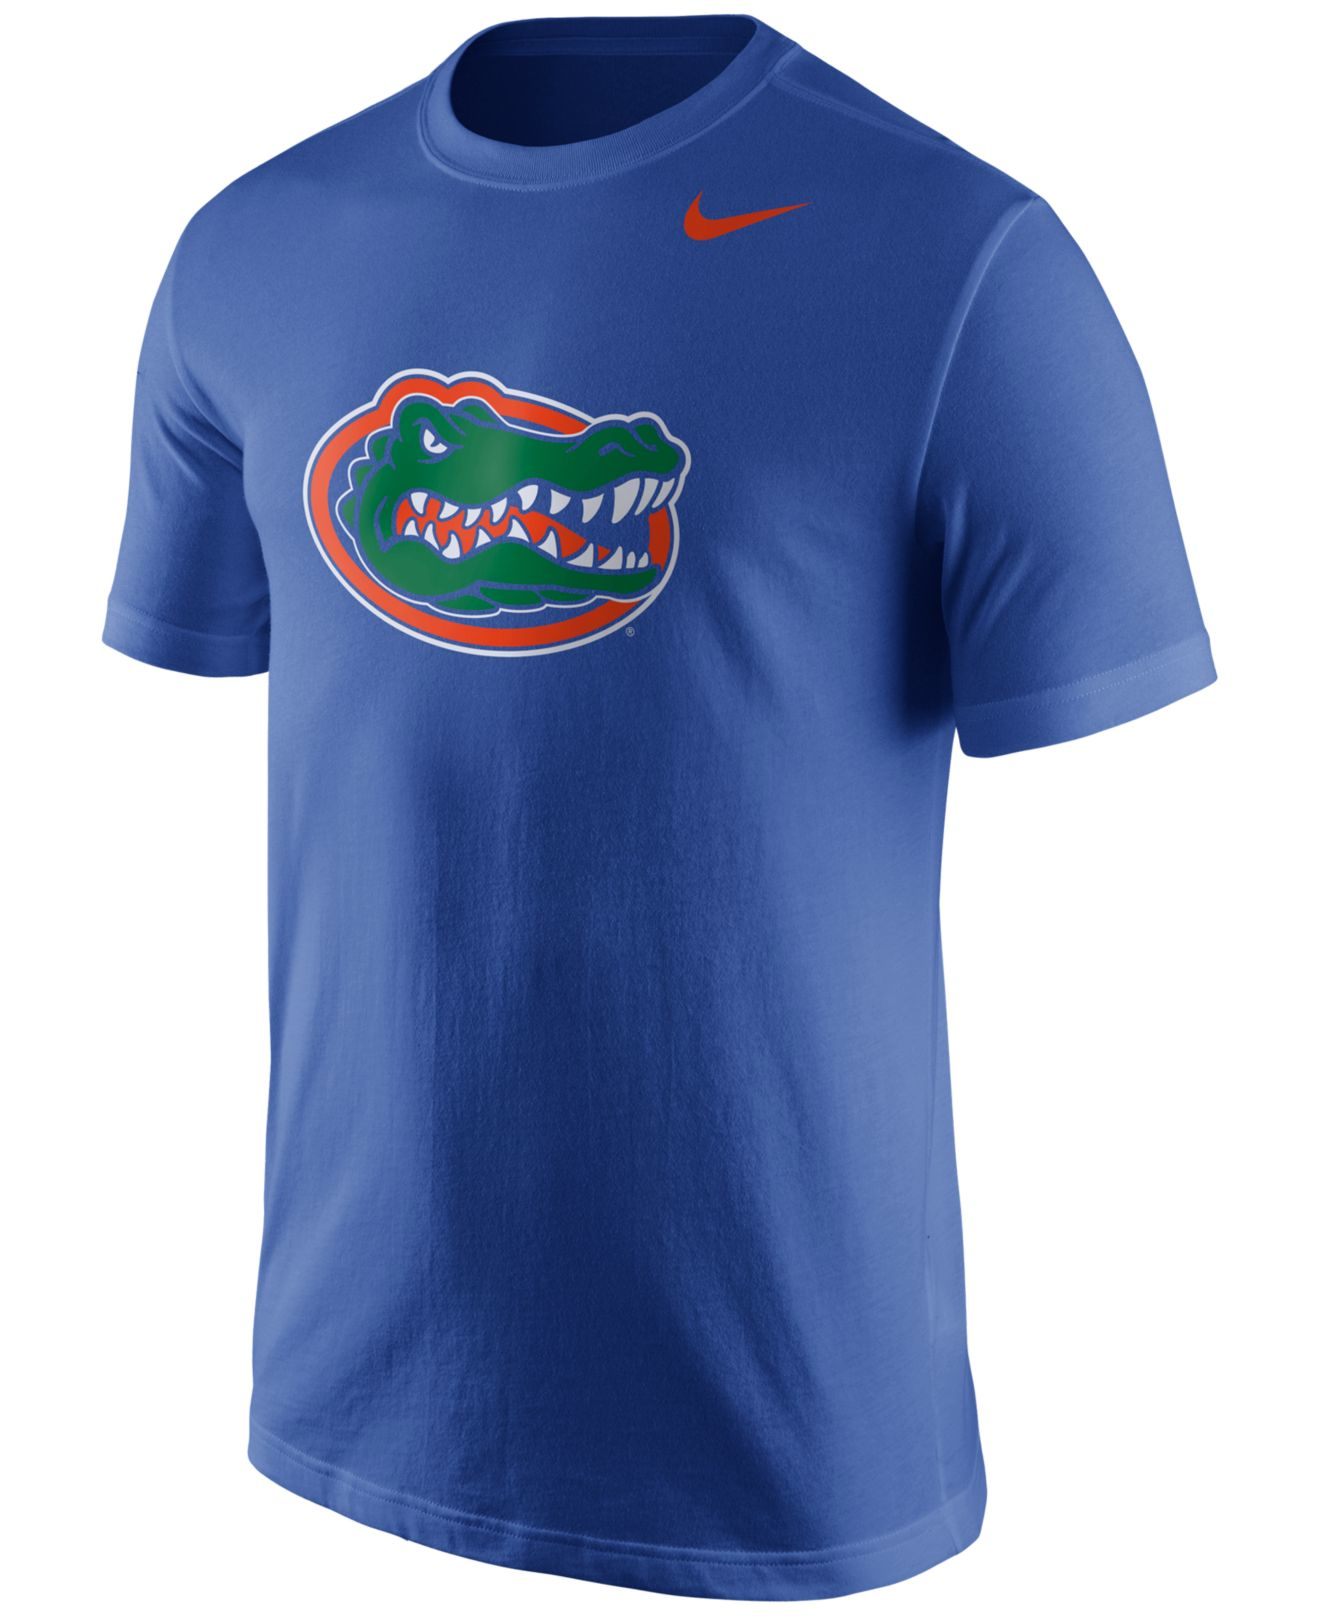 Lyst  Nike Men's Florida Gators Logo Tshirt in Blue for Men